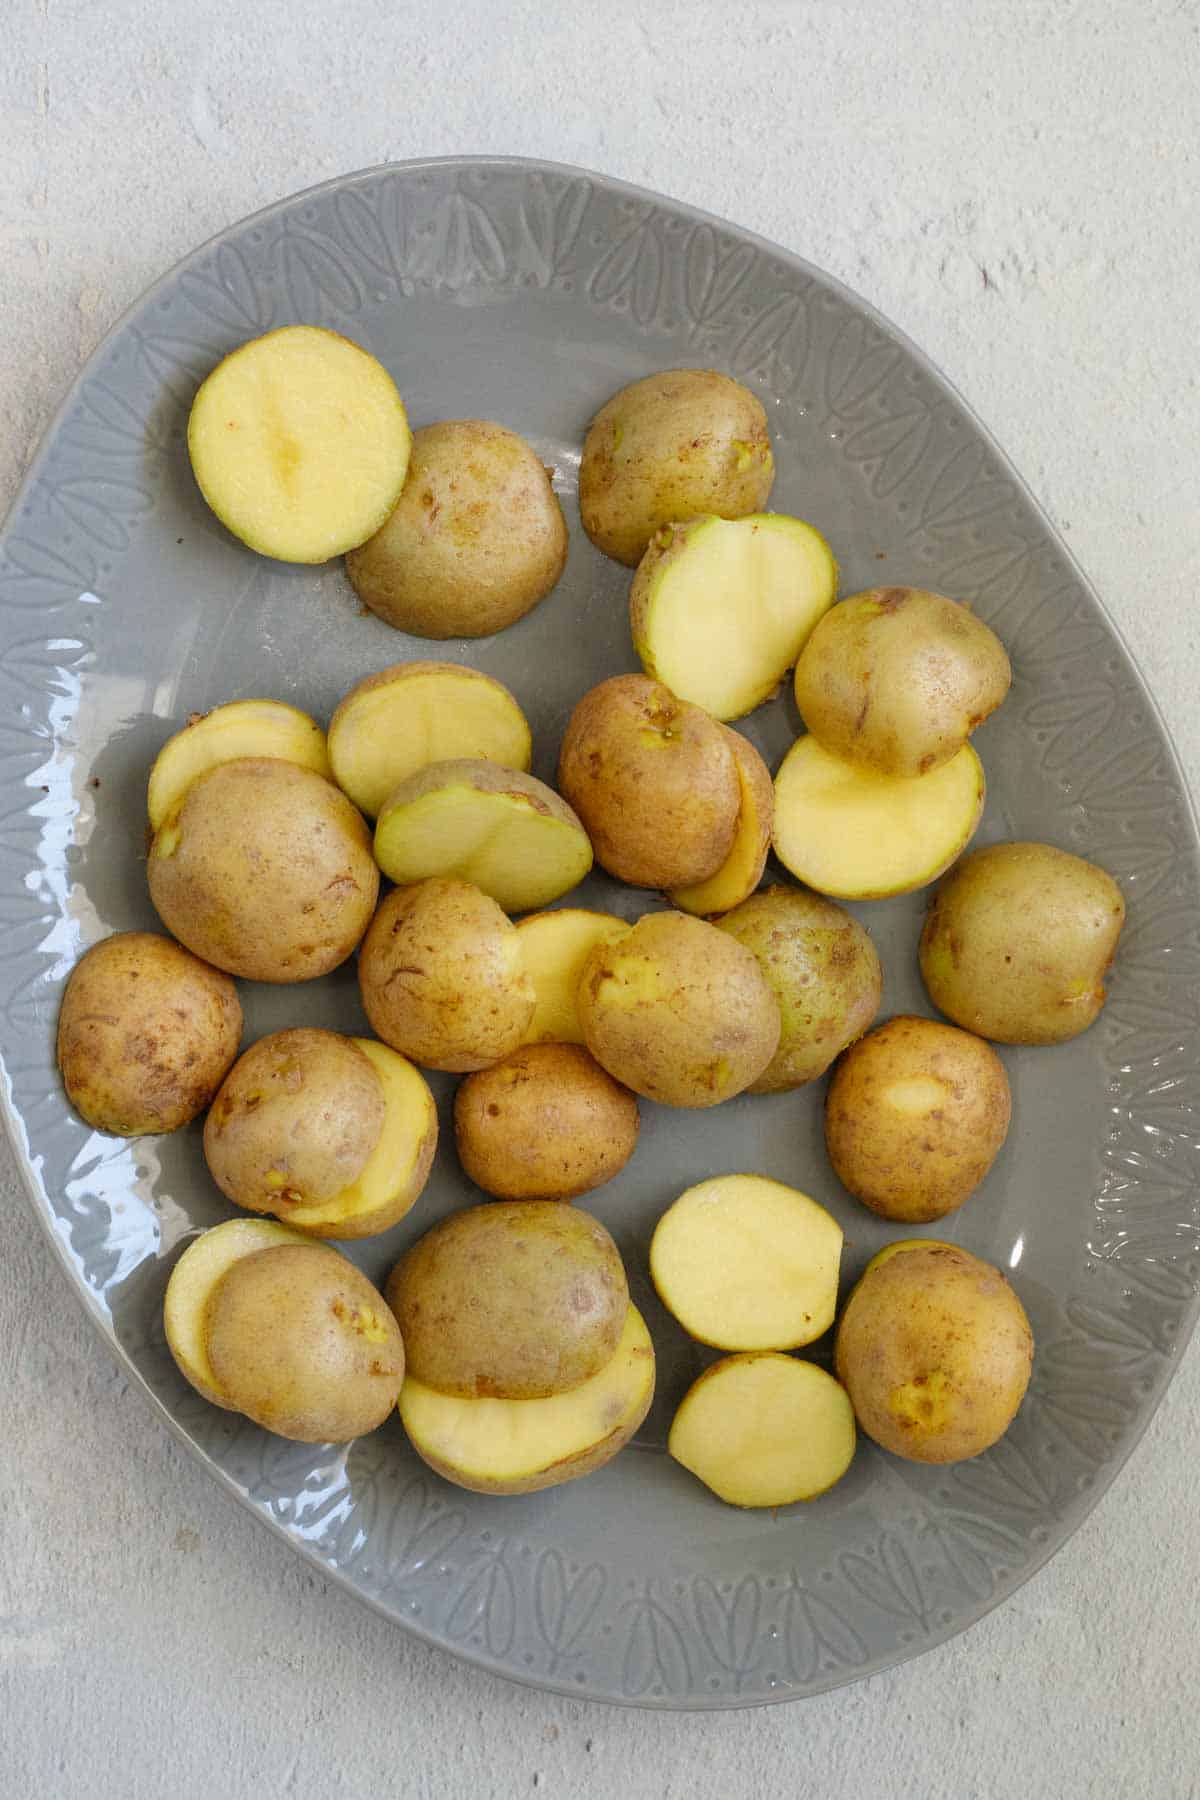 All potatoes freshly cut in a plate.